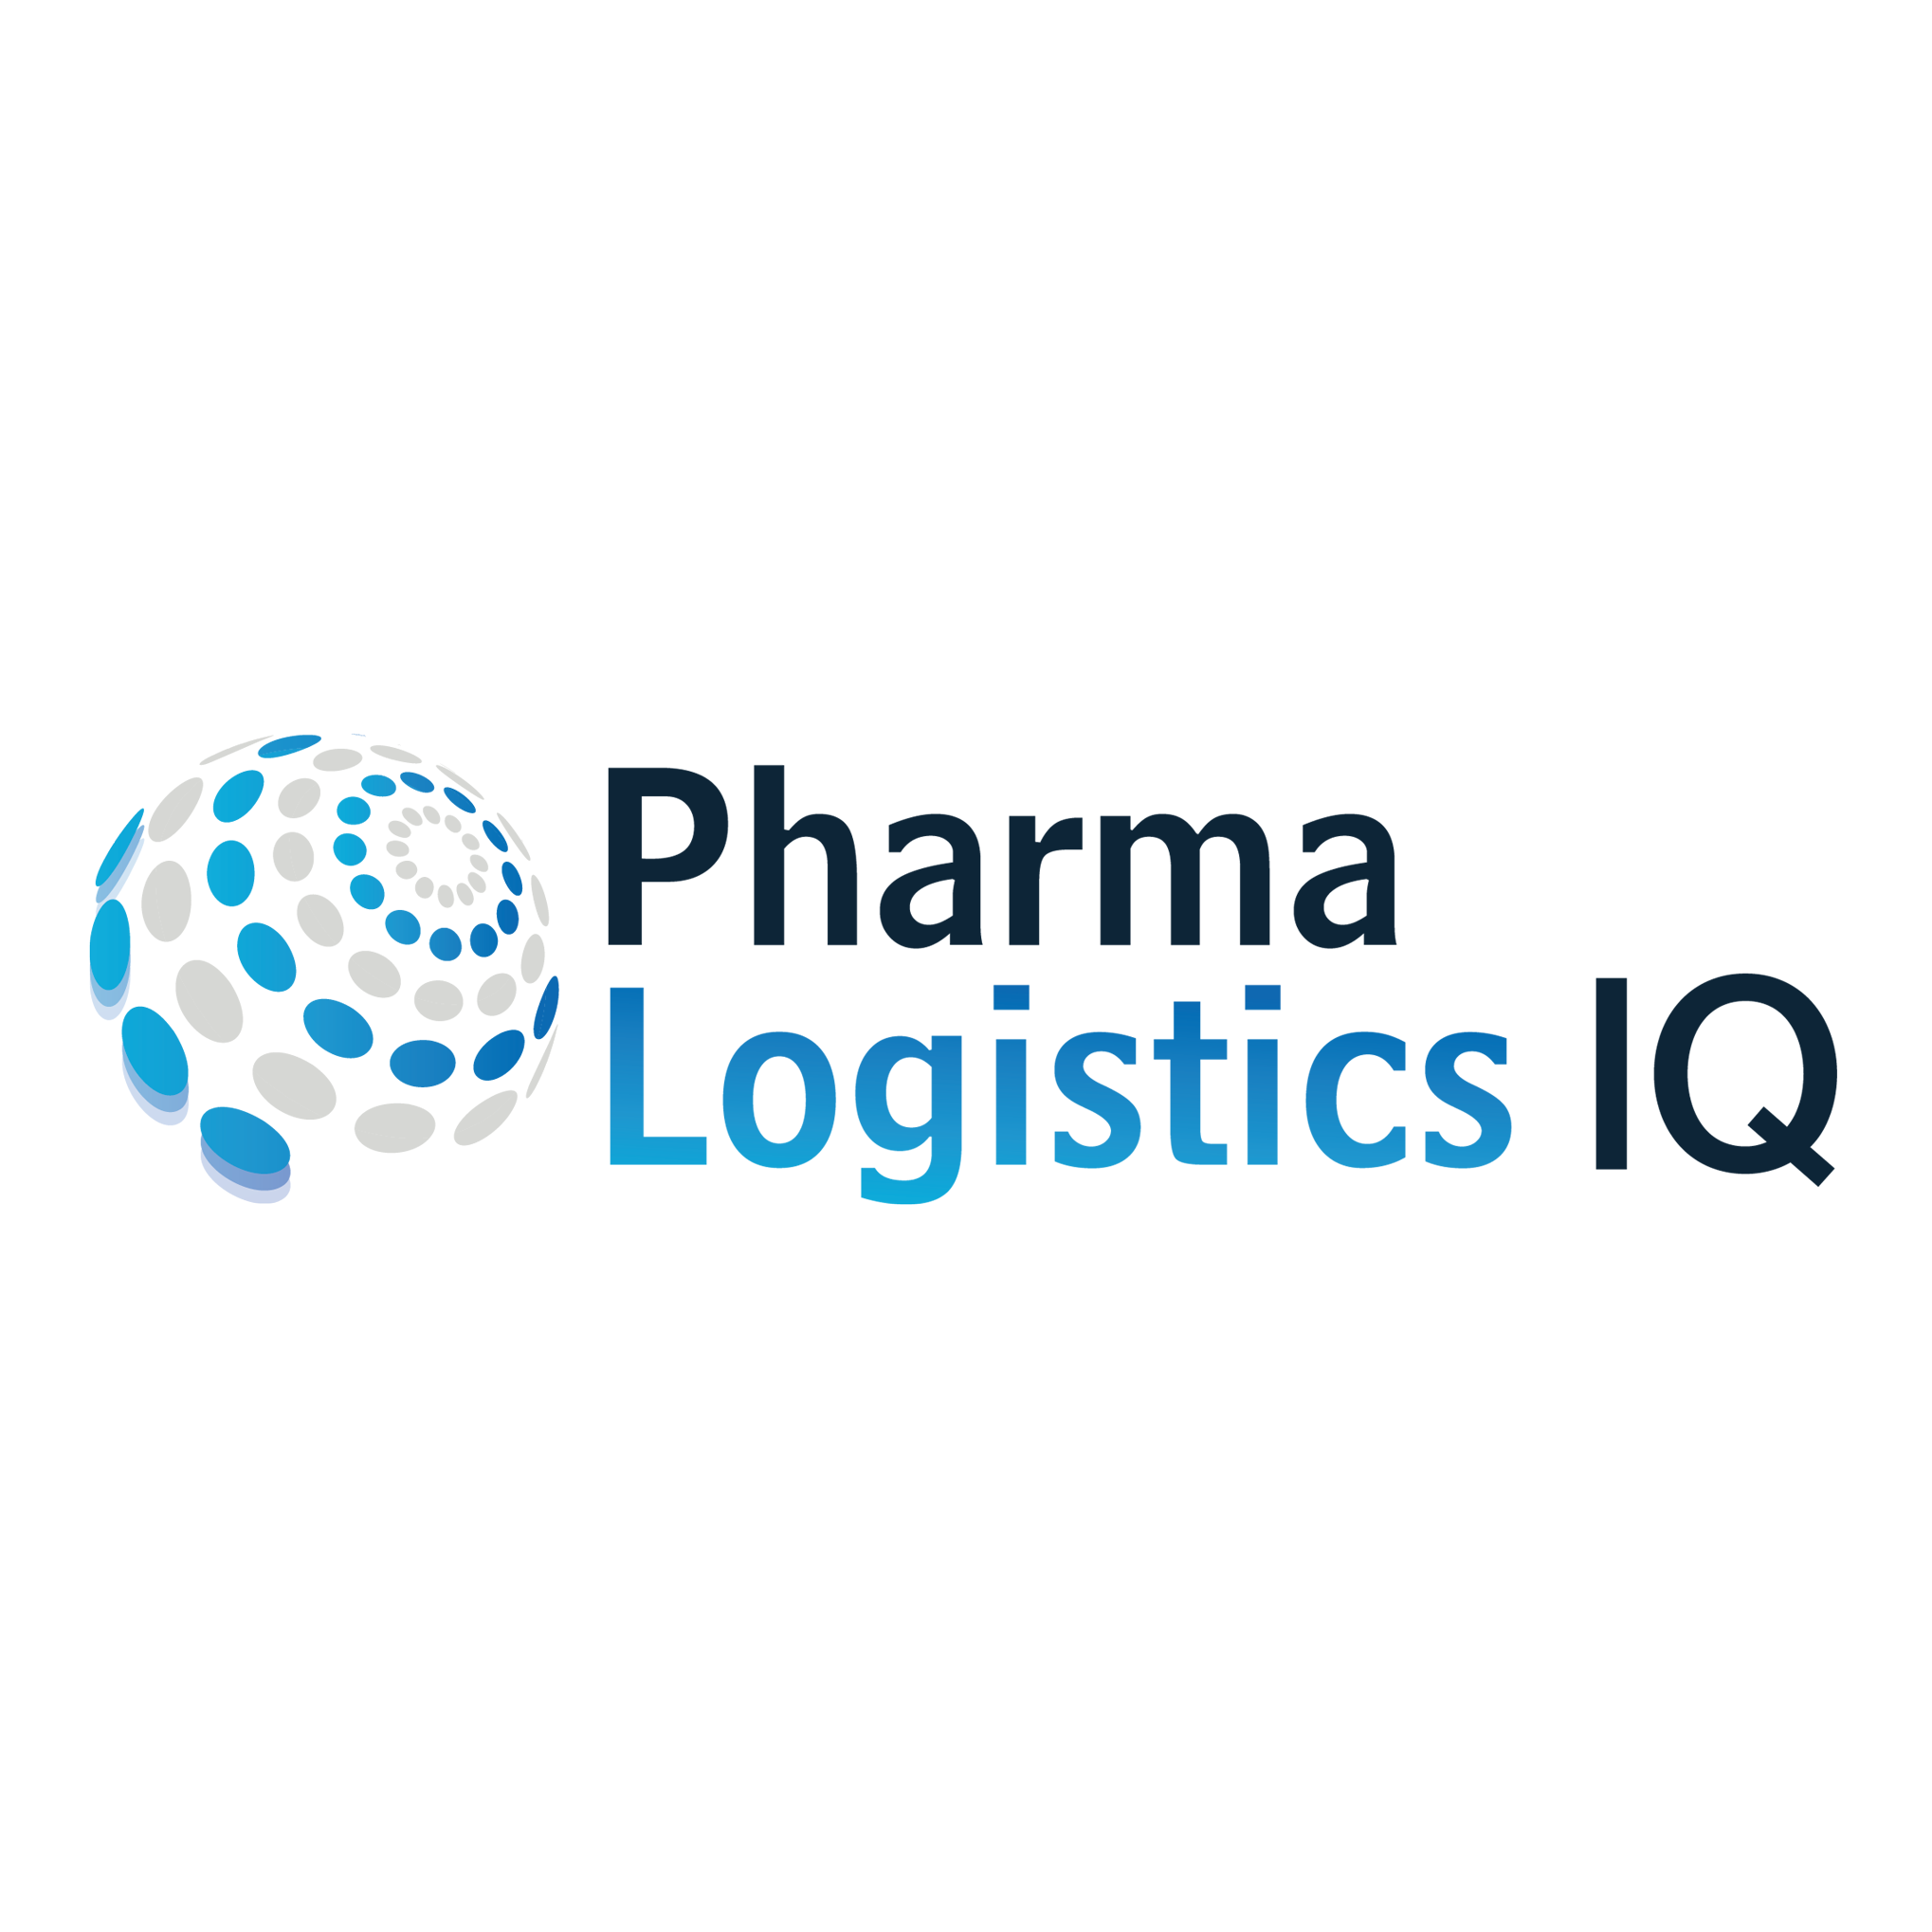 Pharma Logistics IQ logo - pharmaceutical supply chain management services